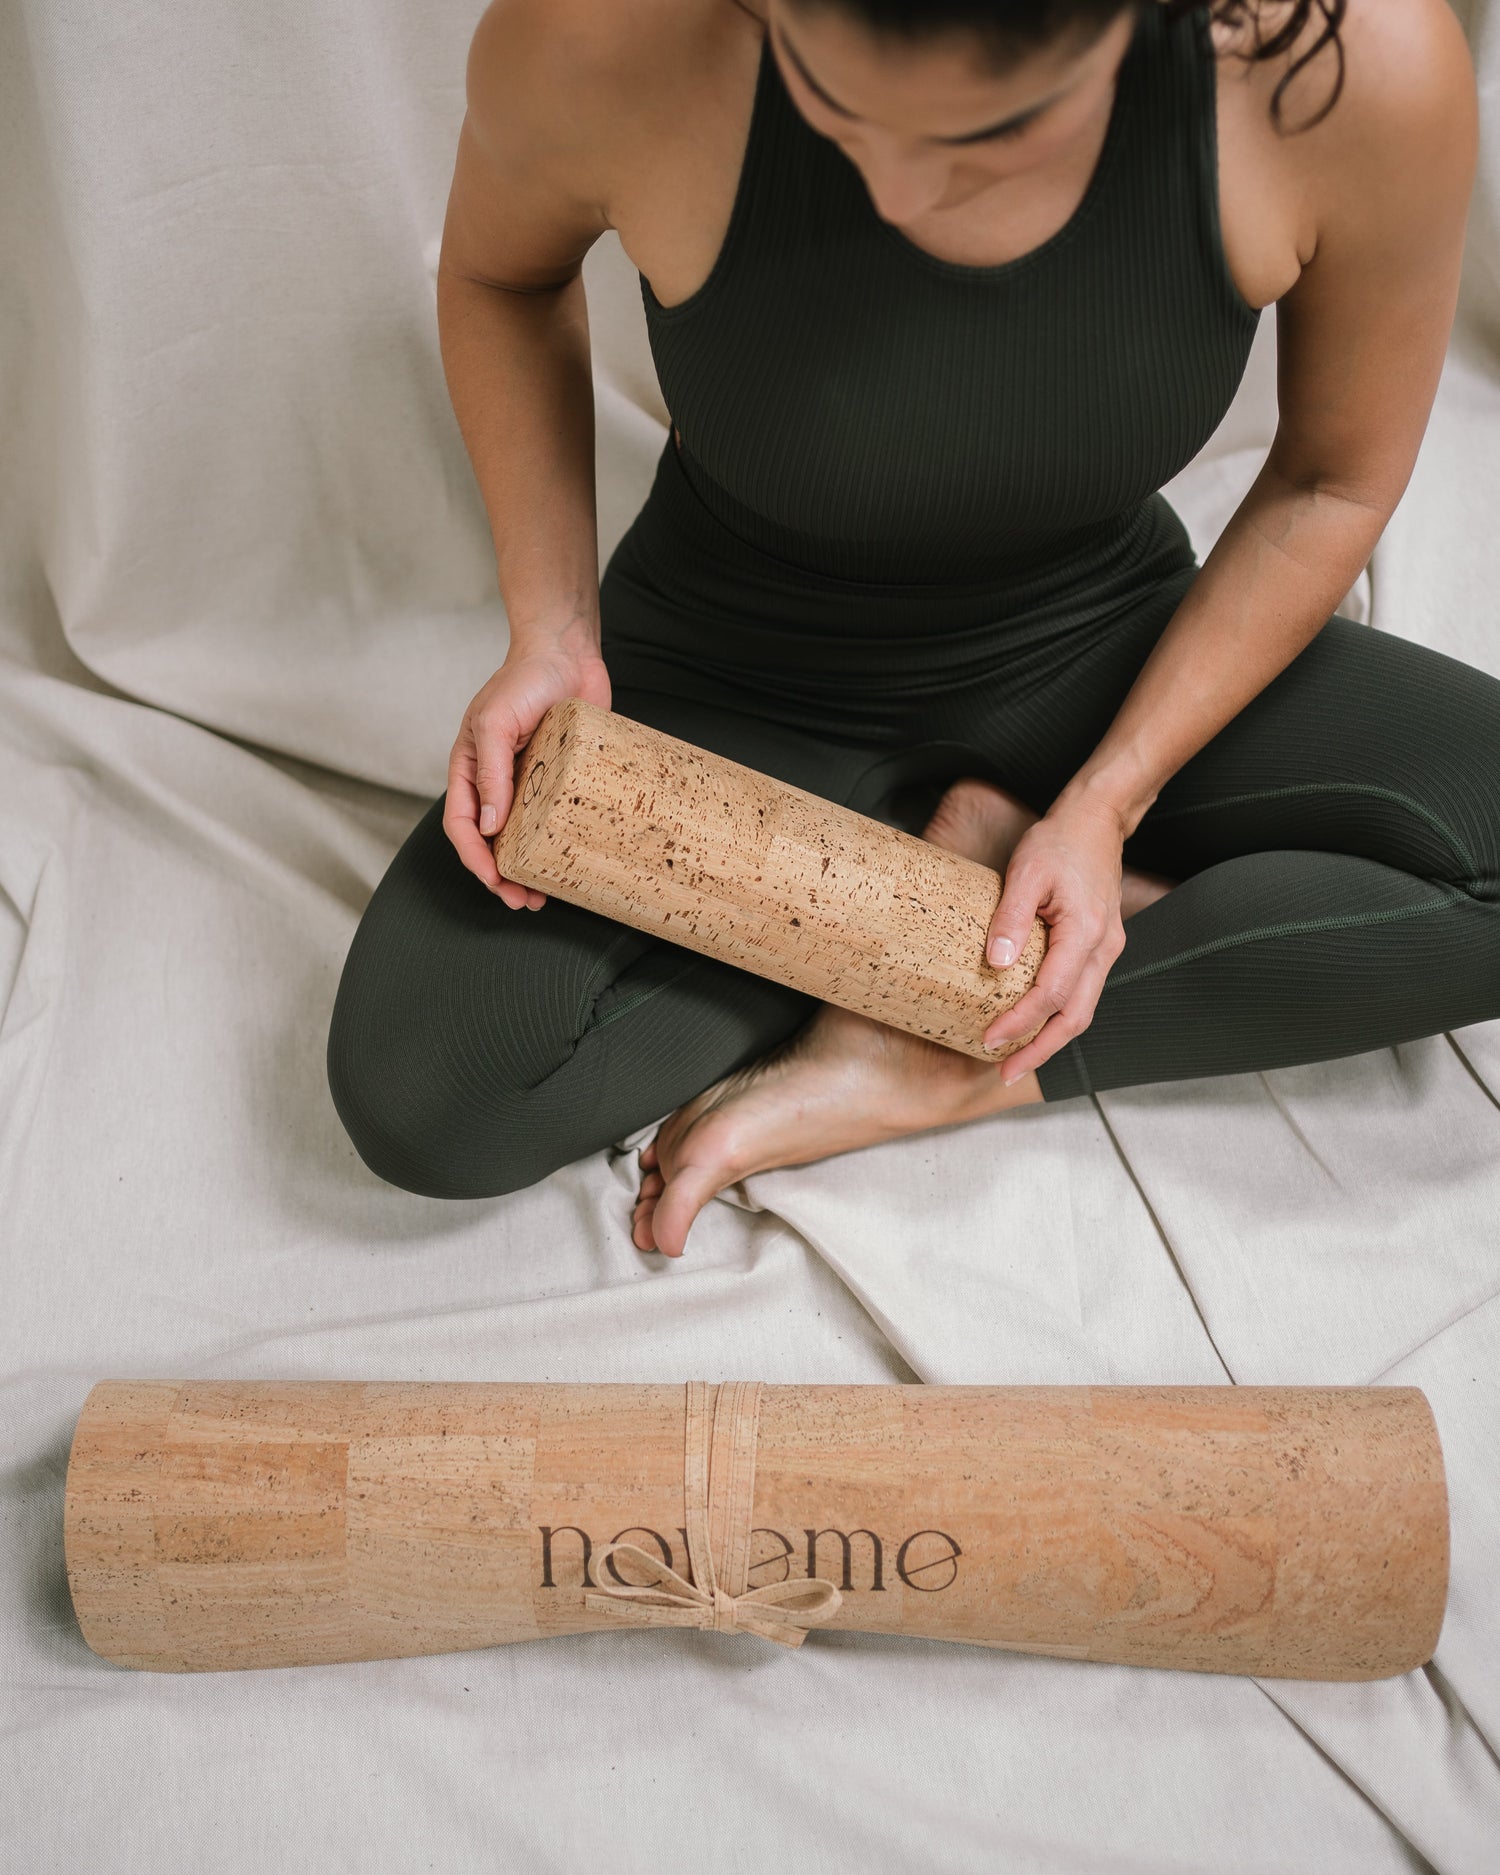 Yogi holding a Noveme cork roller sitting next to a Noveme cork yoga mat